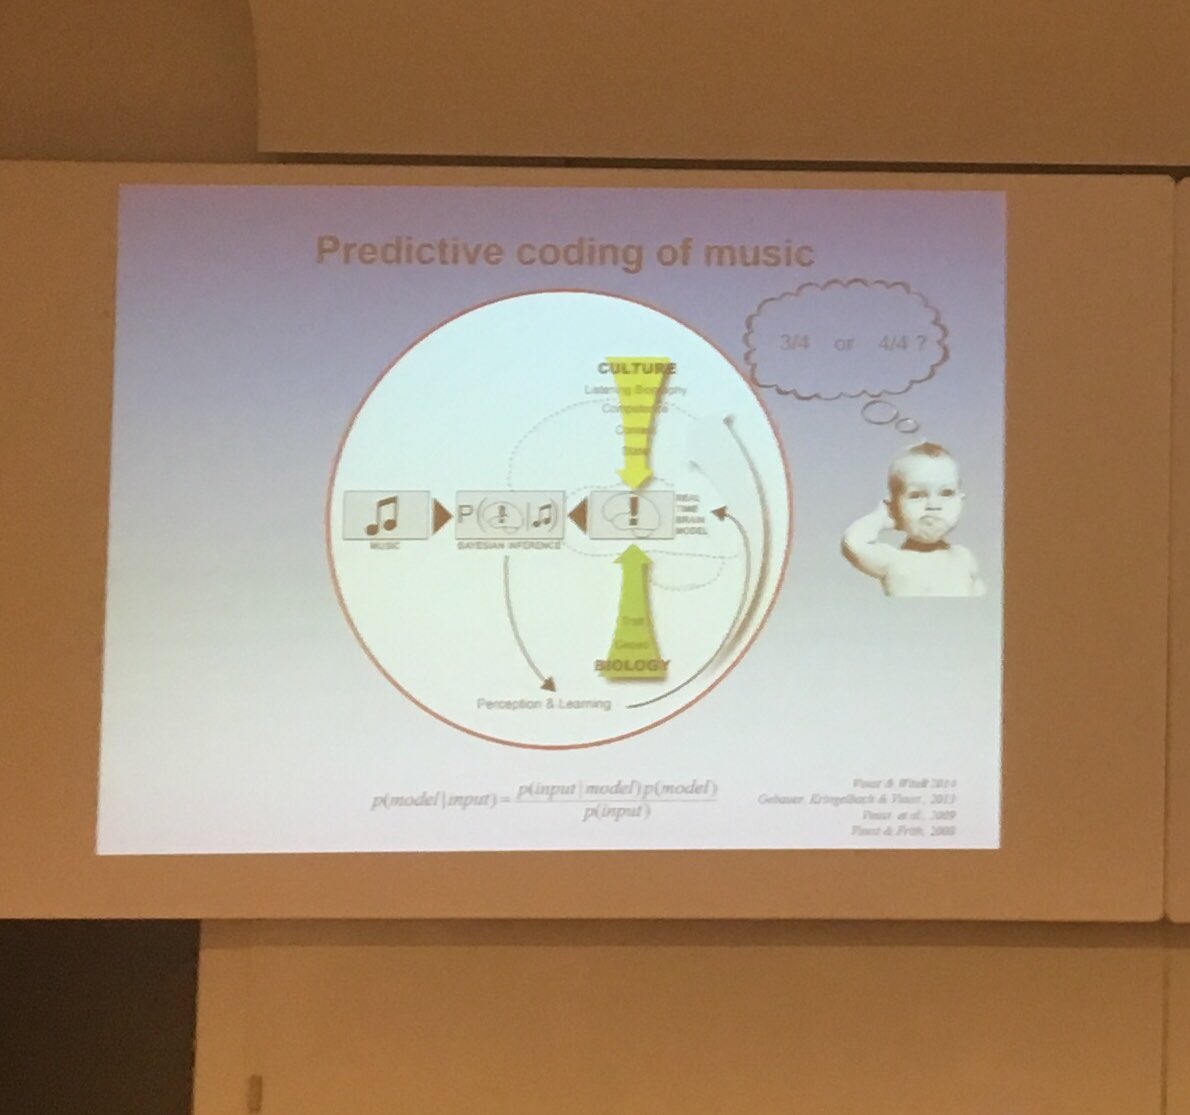 Prof. Peter Vuust on #predictivecoding of music #MMN2018Helsinki #MMN2018 #MMNconference